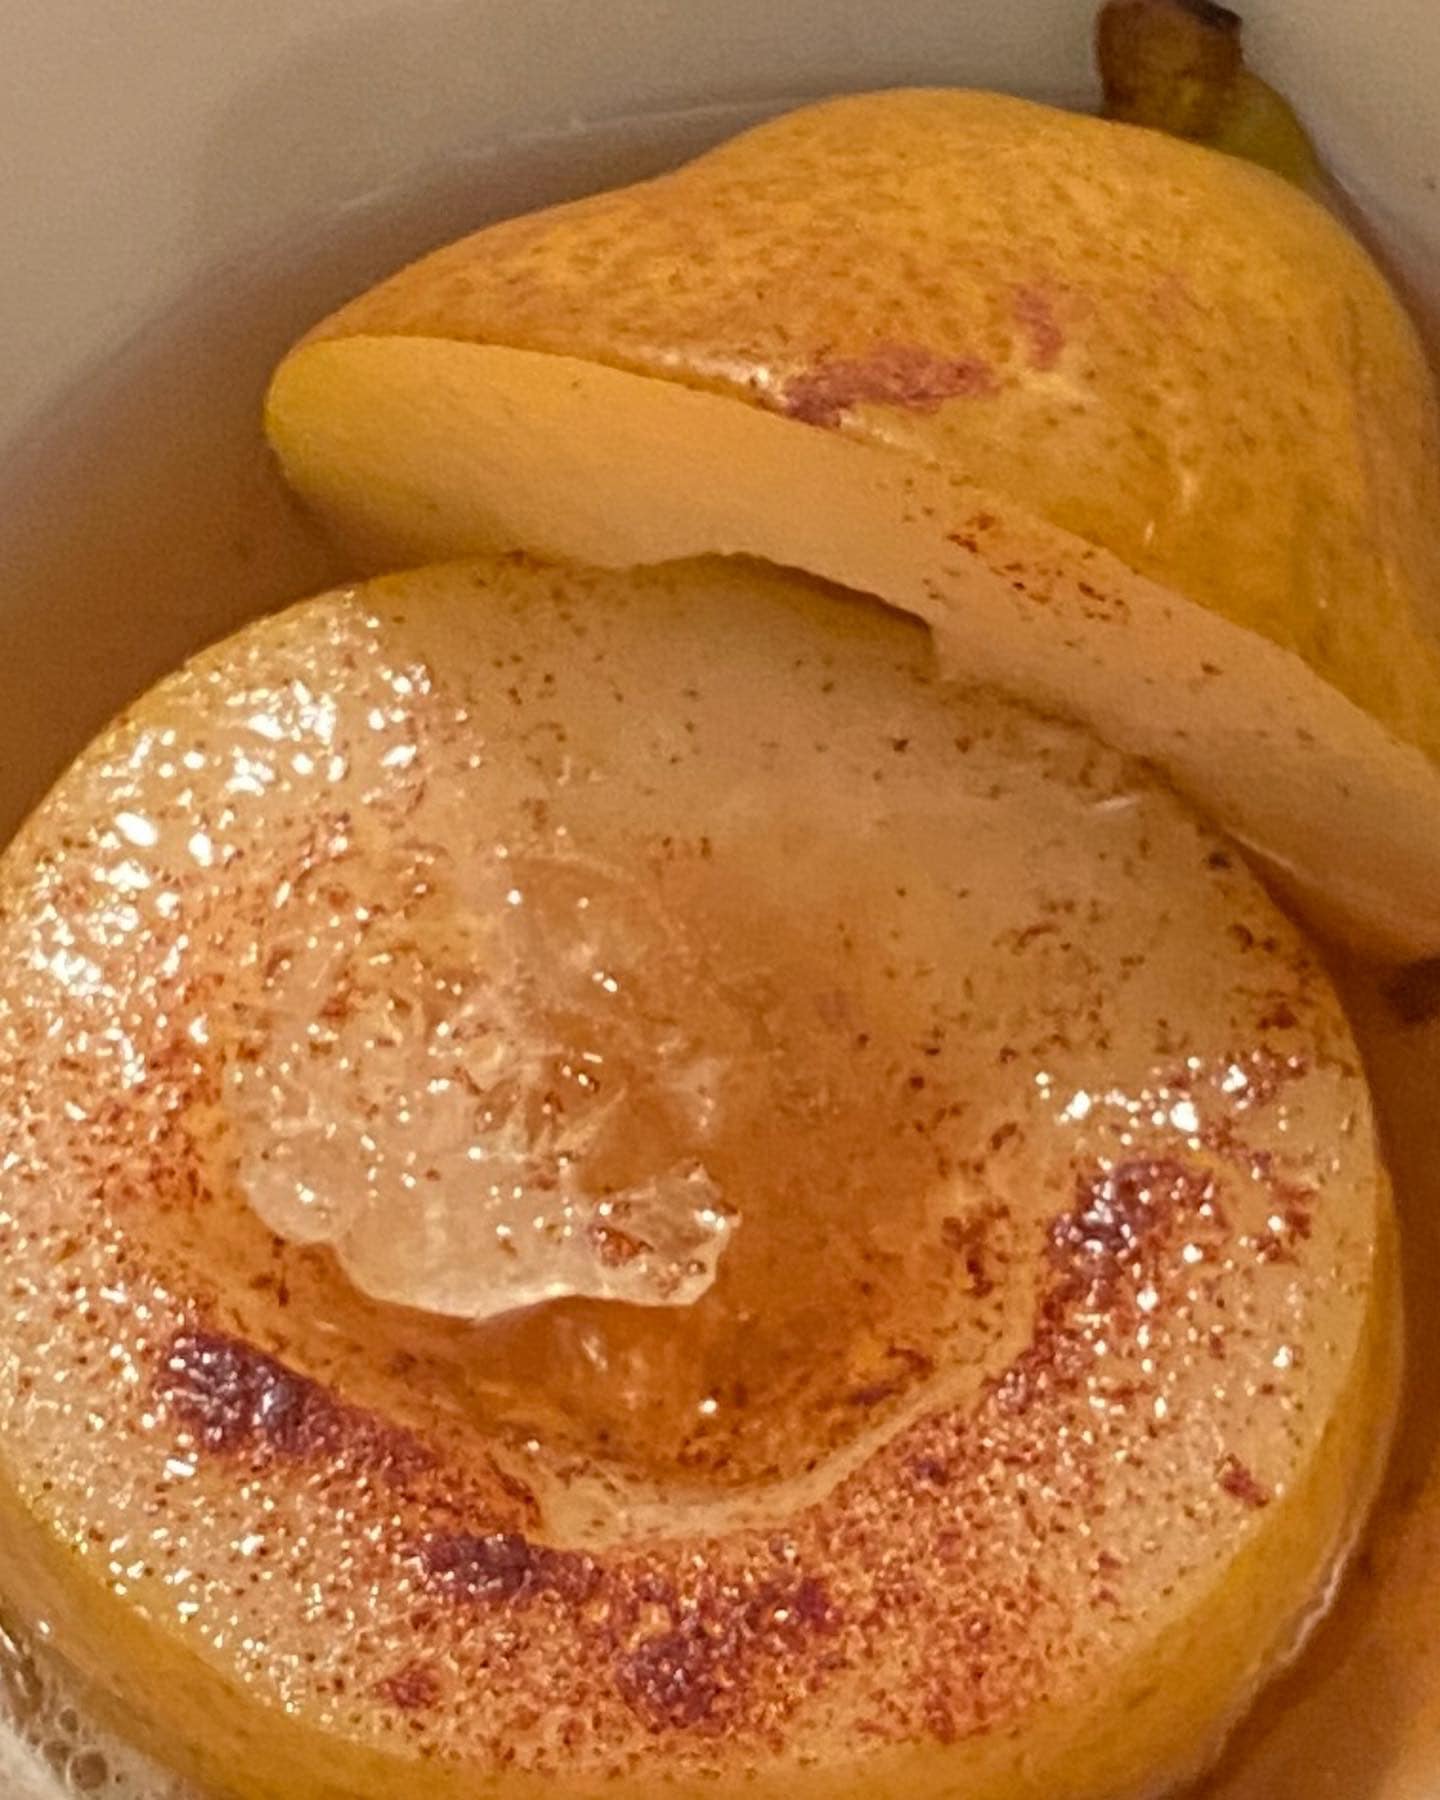 steamed cinnamon pear in rock sugar or honey